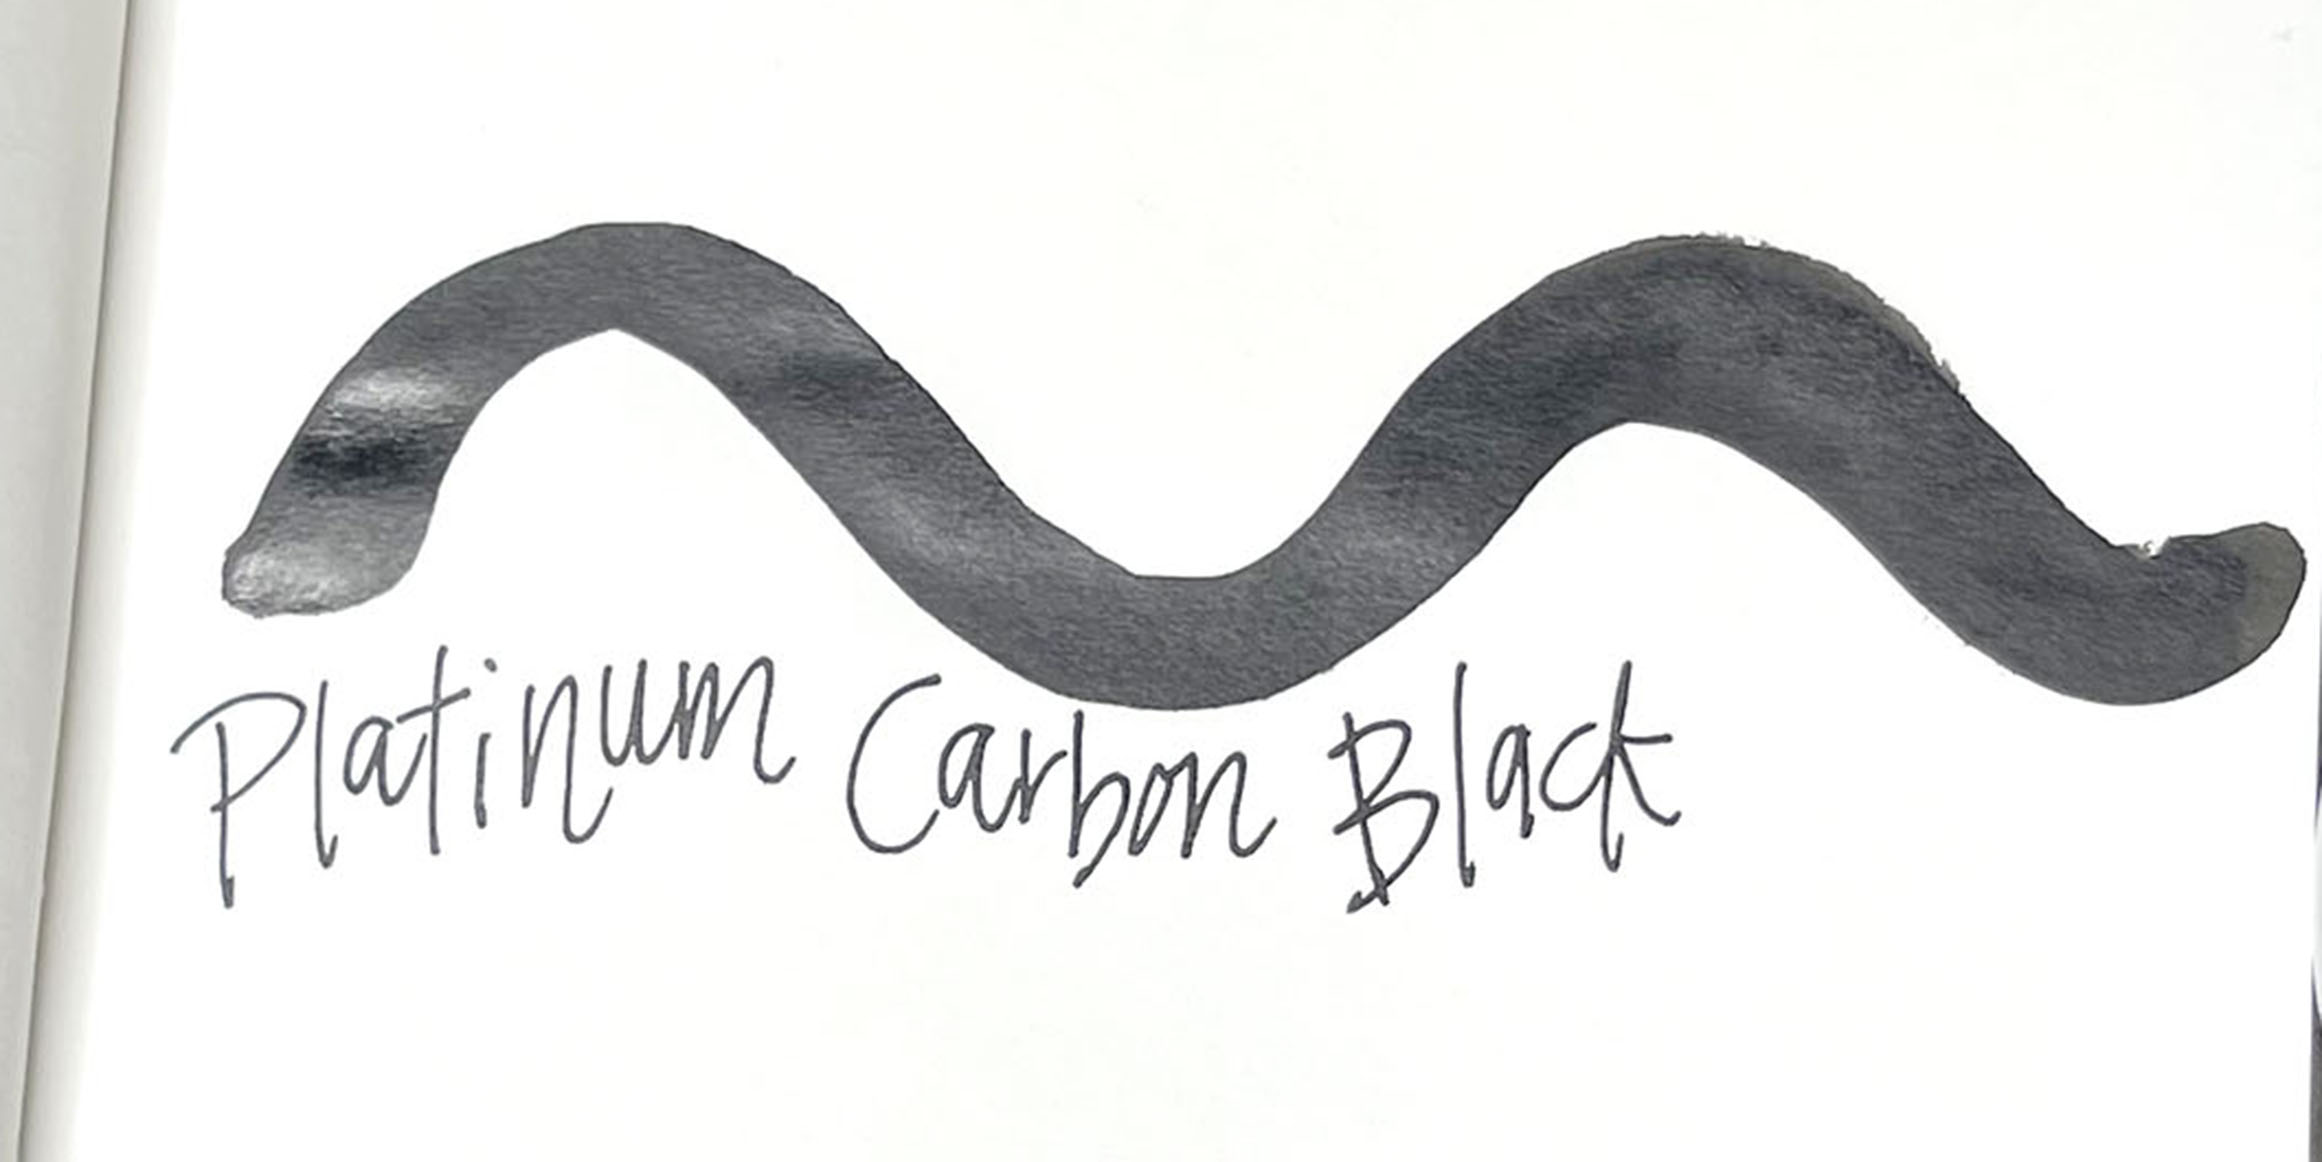 Platinum Chou-Kuro Ultimate Black Carbon Ink Set